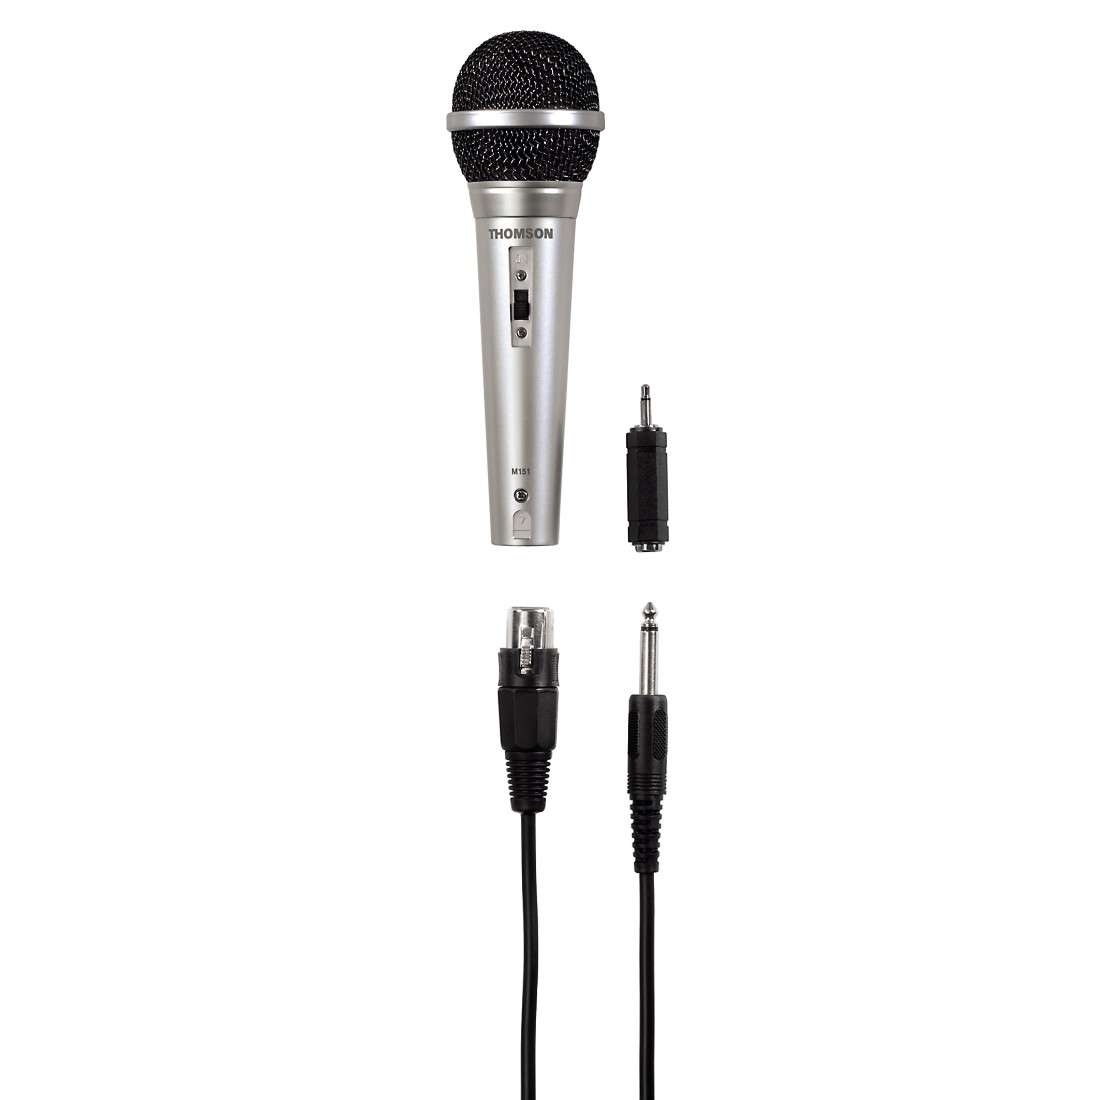 THOMSON (LIZENZMARKE) M151 Dynamisches Mikrofon mit XLR-Stecker, Karaoke